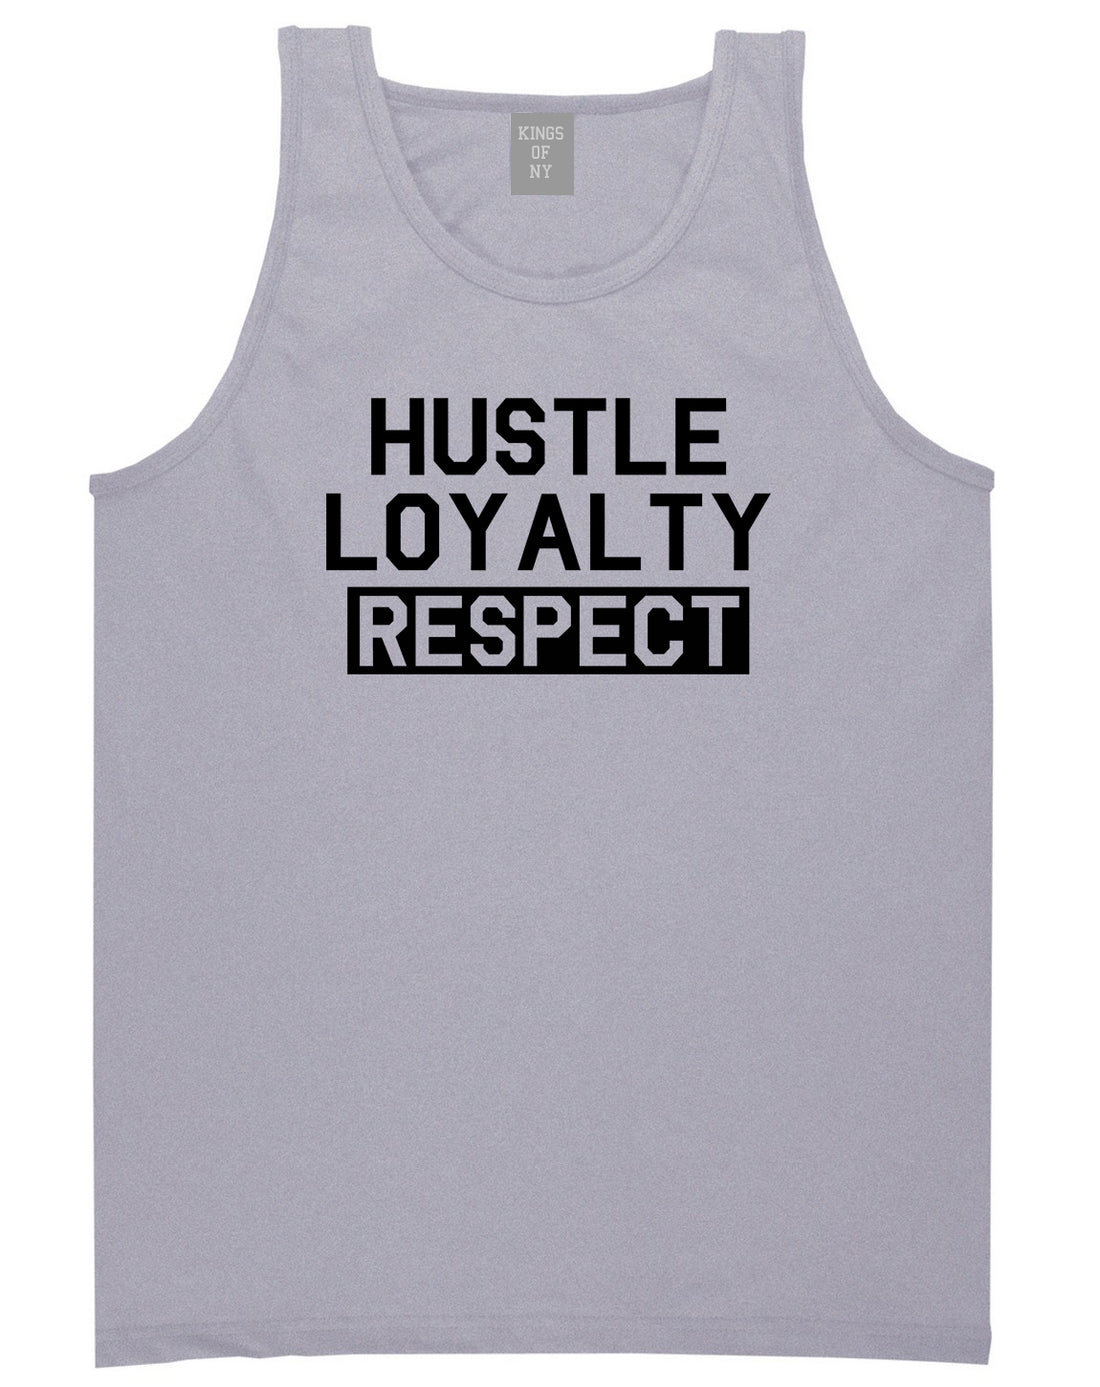 Hustle Loyalty Respect Mens Tank Top Shirt Grey by Kings Of NY